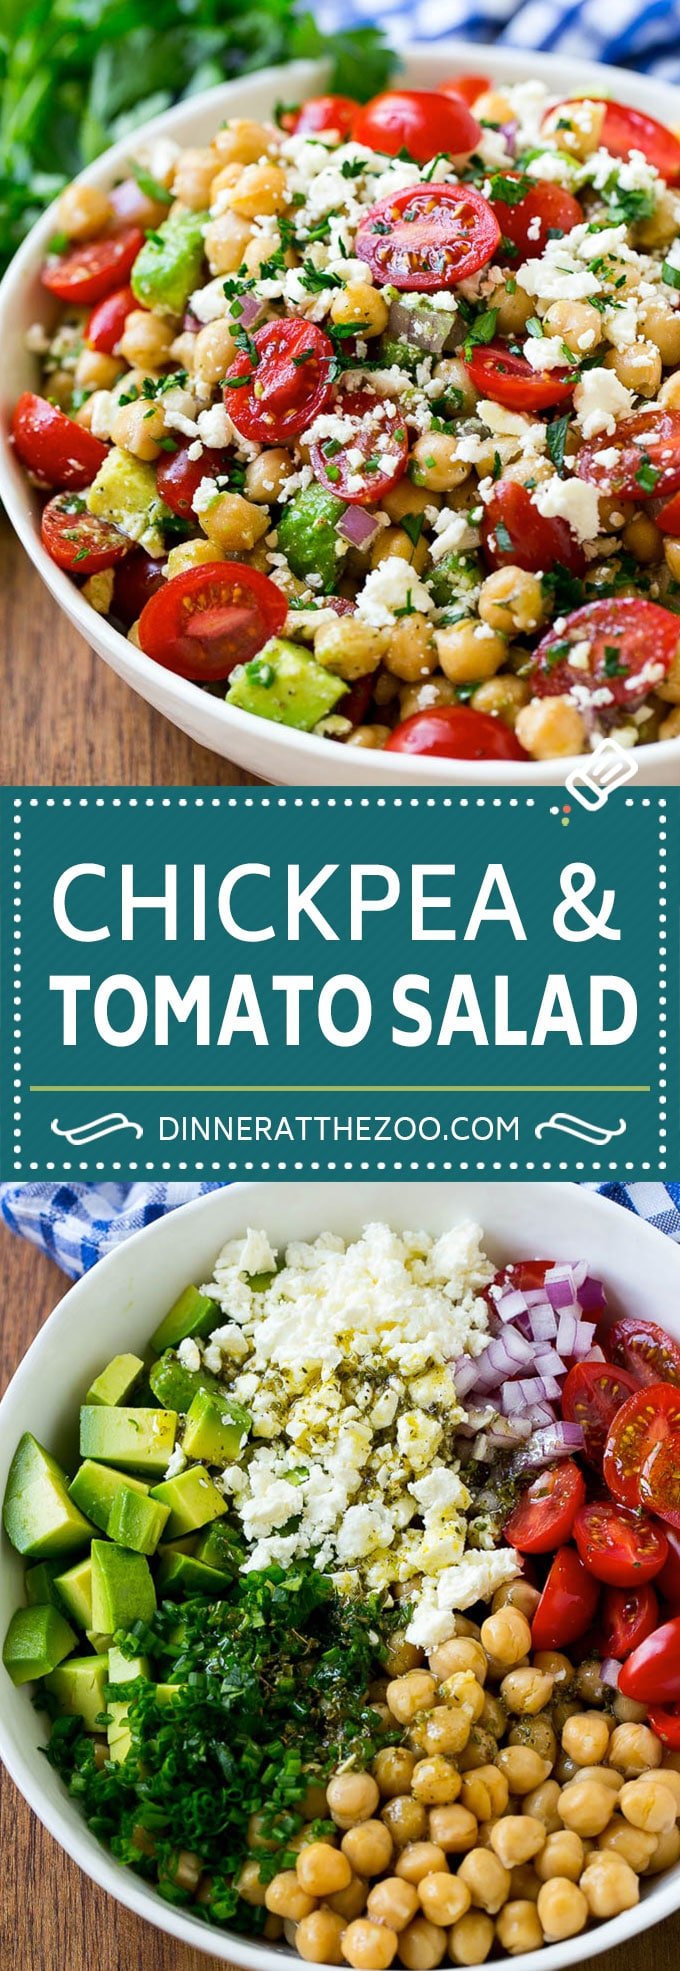 Chickpea Salad Recipe | Chickpea and Tomato Salad | Chickpea Avocado Salad | Summer Salad #salad #summer #recipes #dinneratthezoo